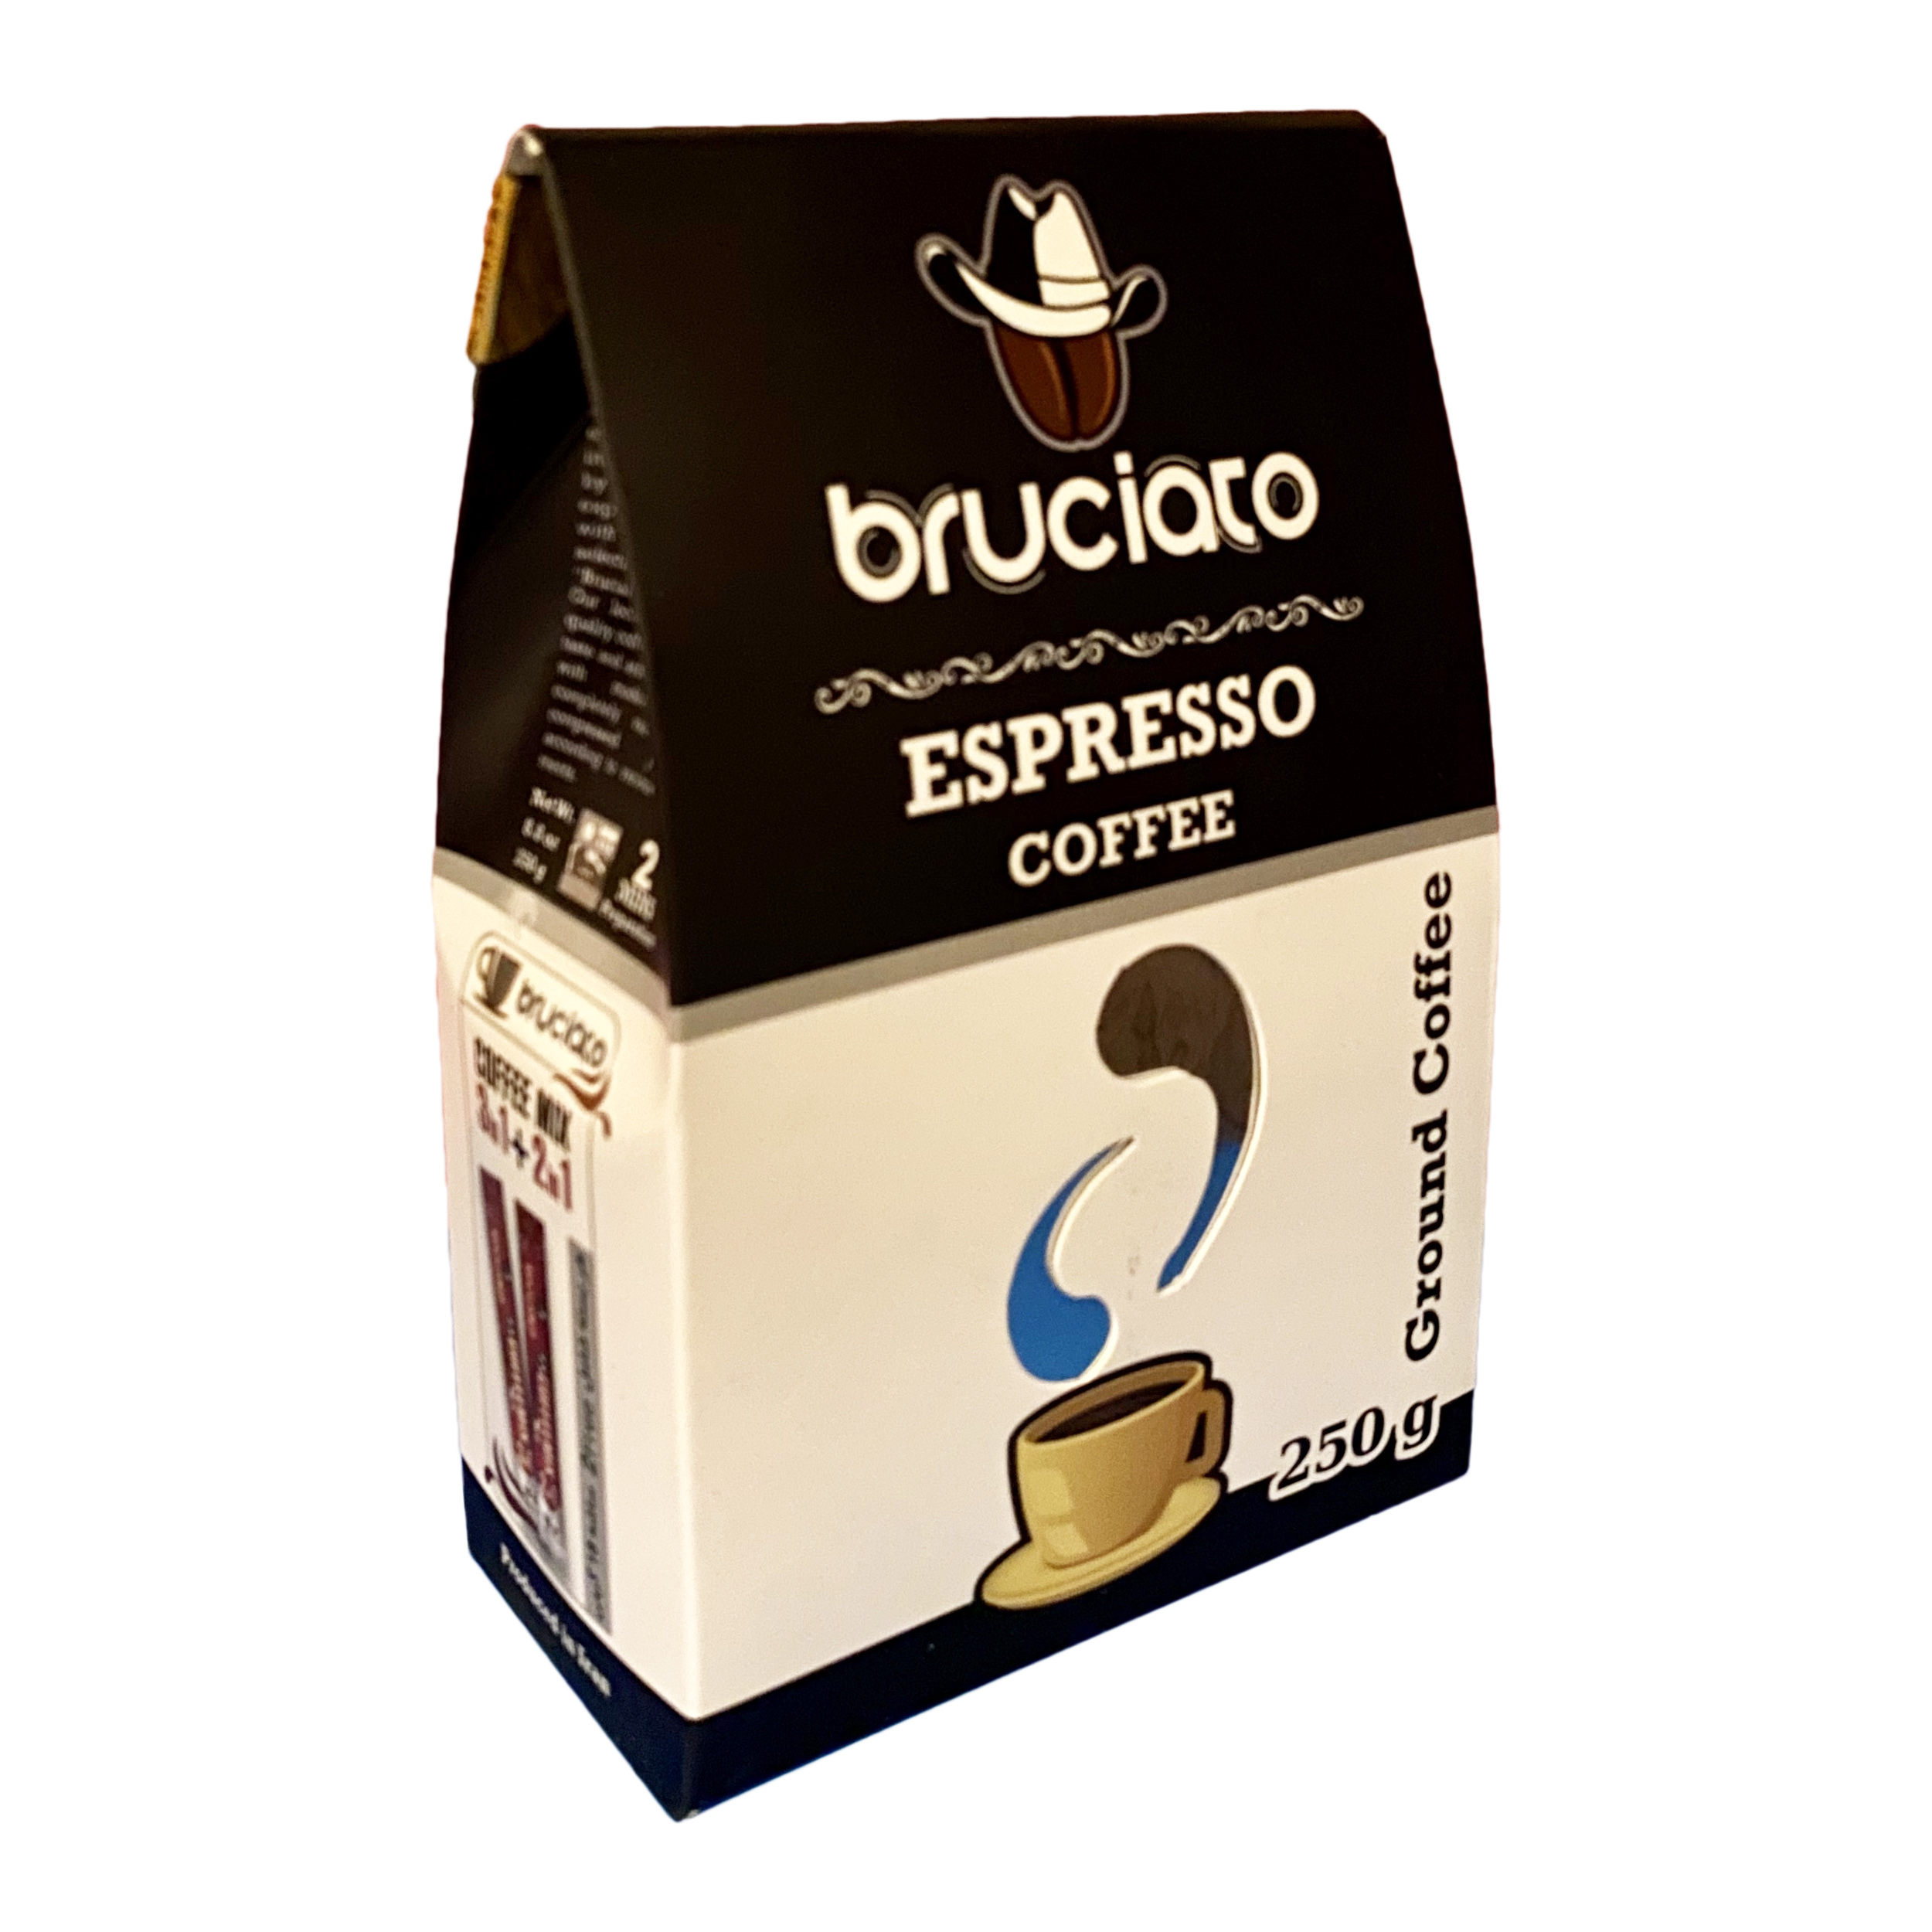 پودر قهوه اسپرسو بروسیاتو - 250 گرم